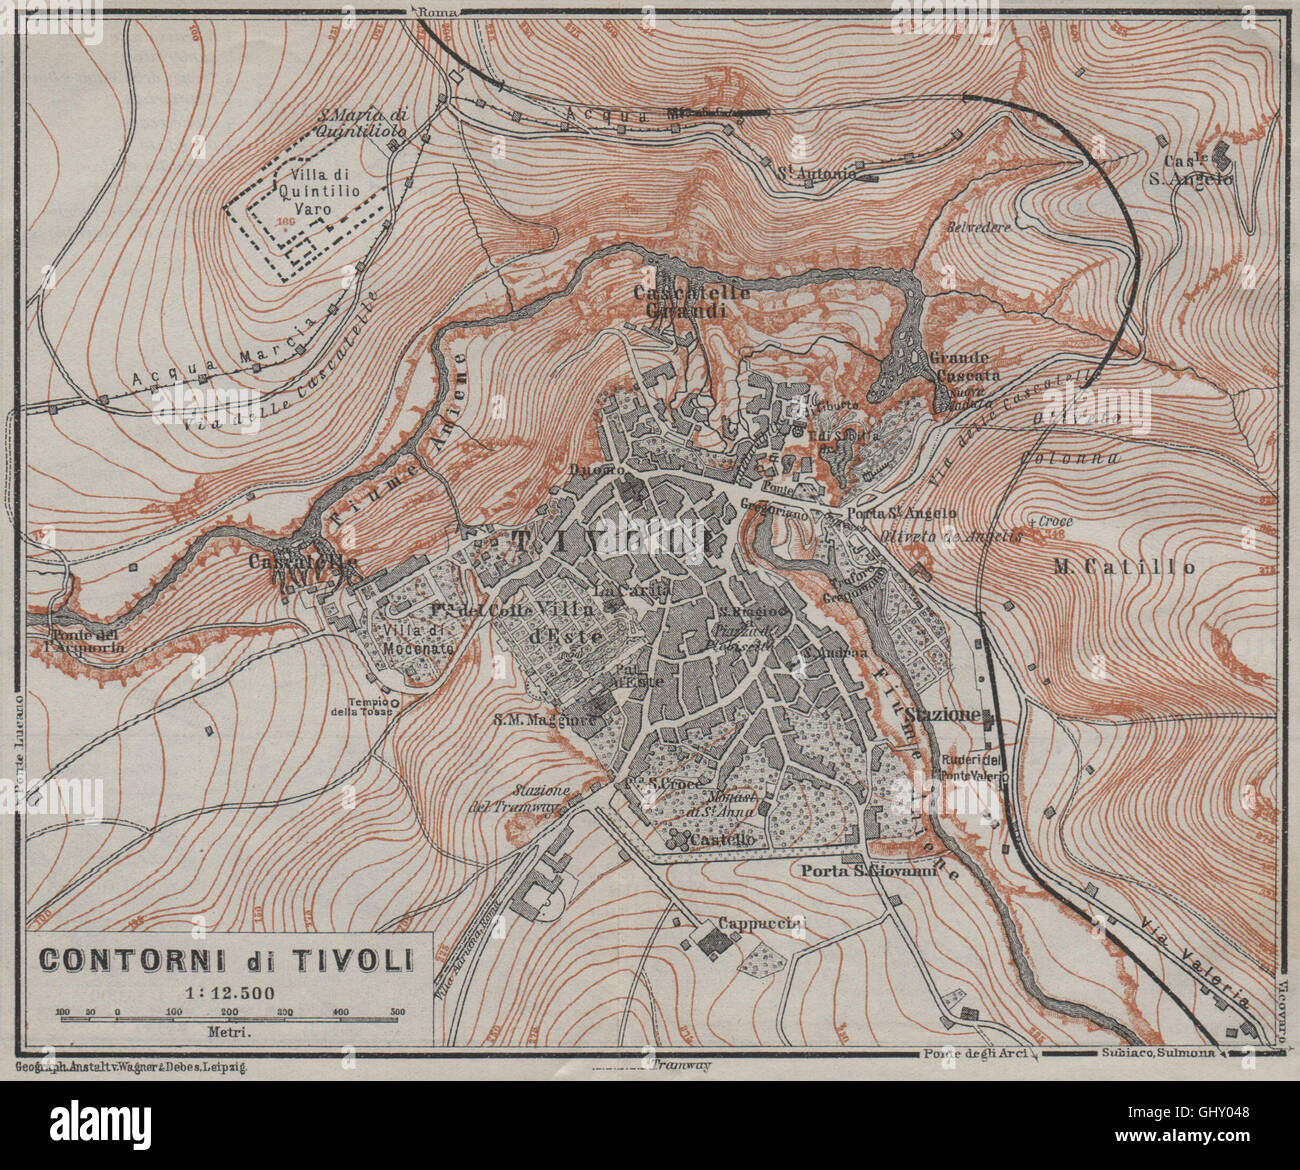 & Environs Tivoli. Contorni di Tivoli. Italie mappa. 1909 BAEDEKER, Banque D'Images